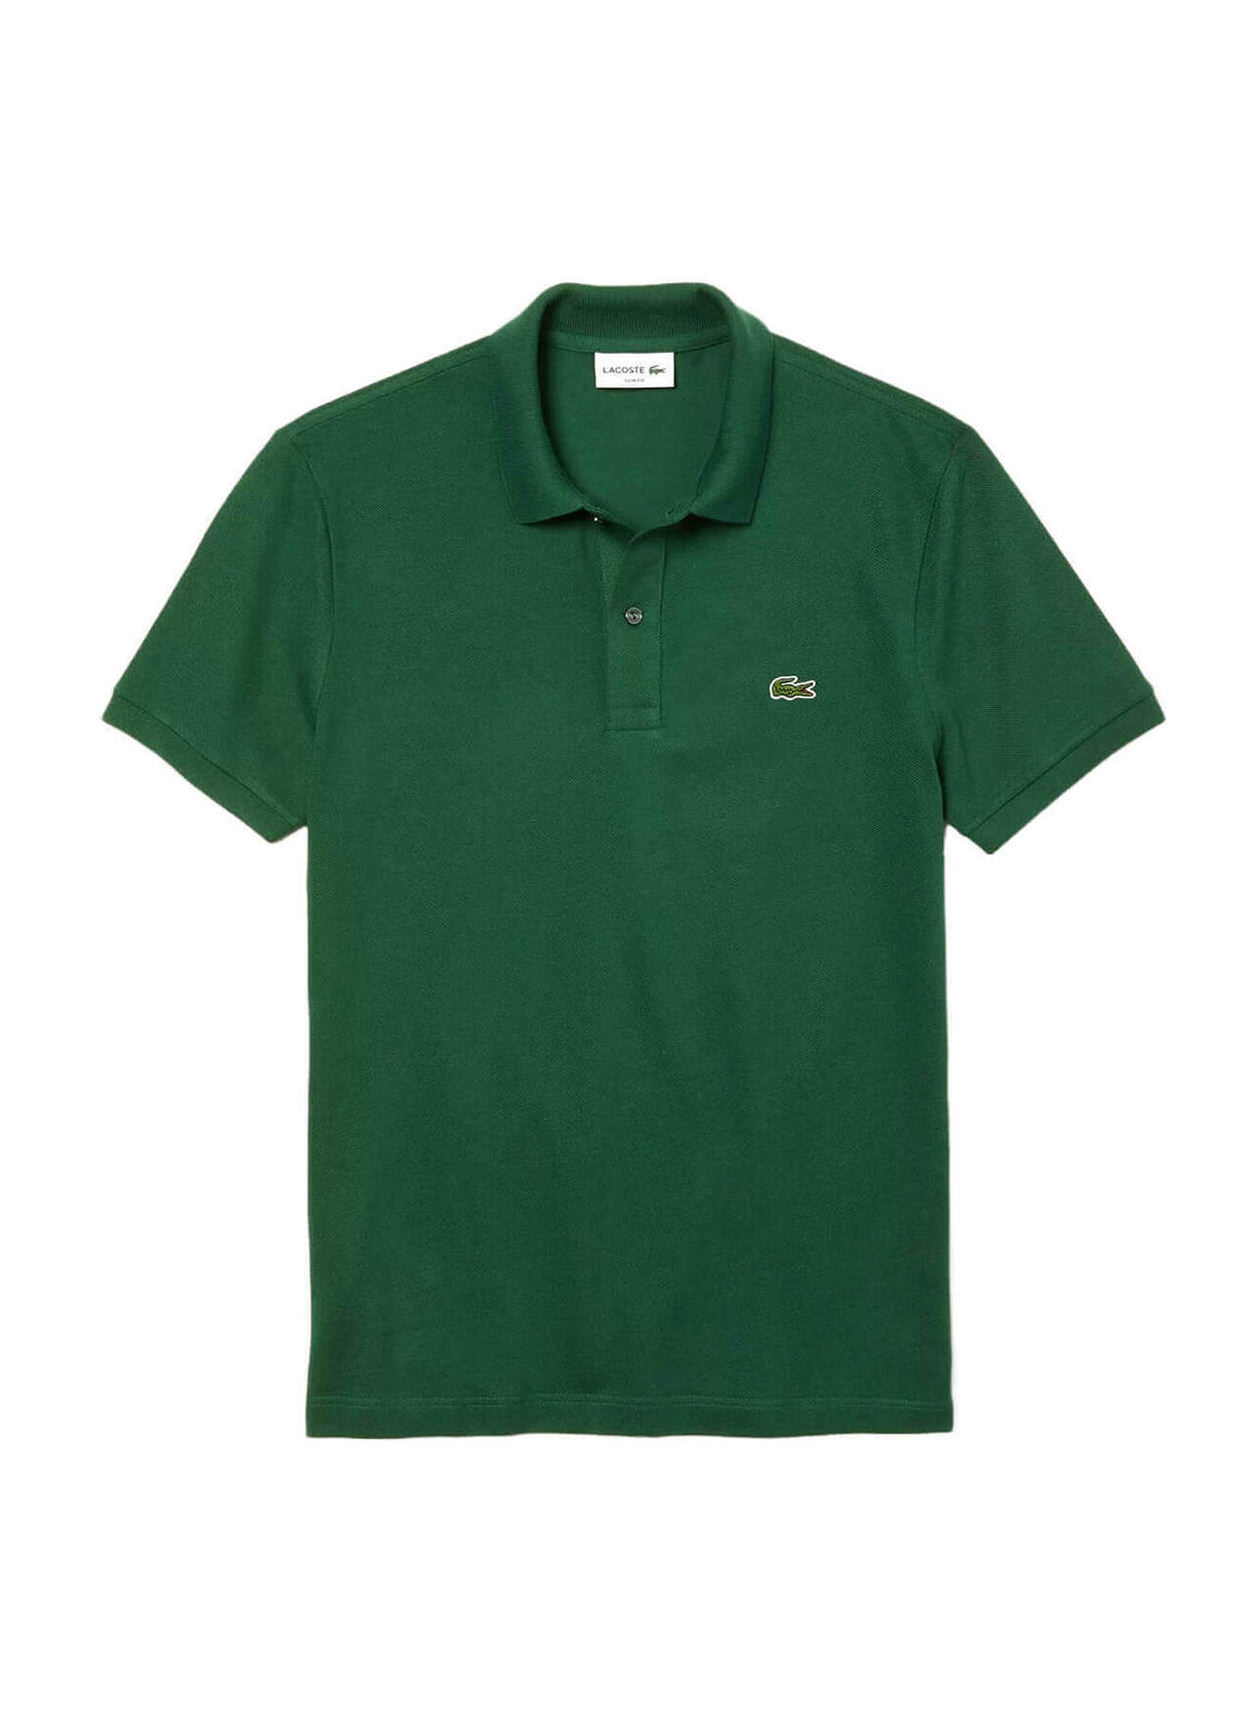 Lacoste Men's Appalachan Green Petit Pique Slim Fit Polo